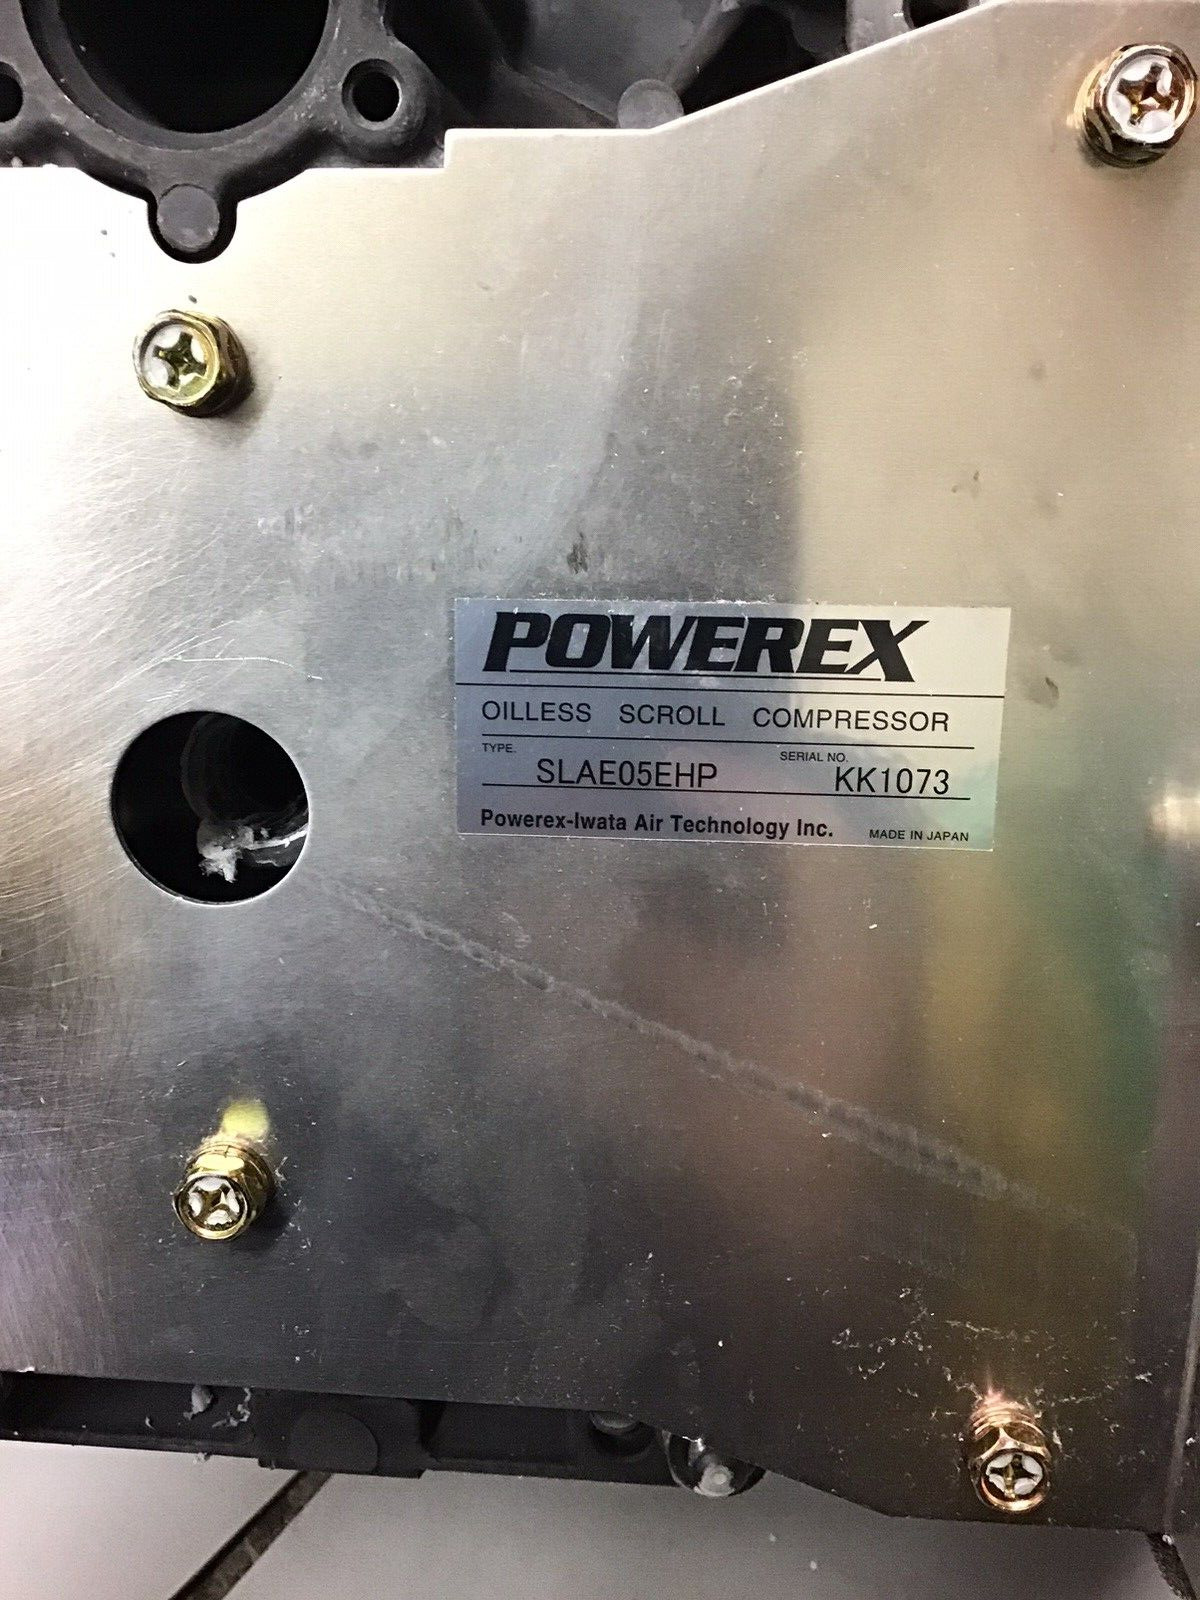 Powerex Slae05ehp Oilless Scroll Compressor (r6)